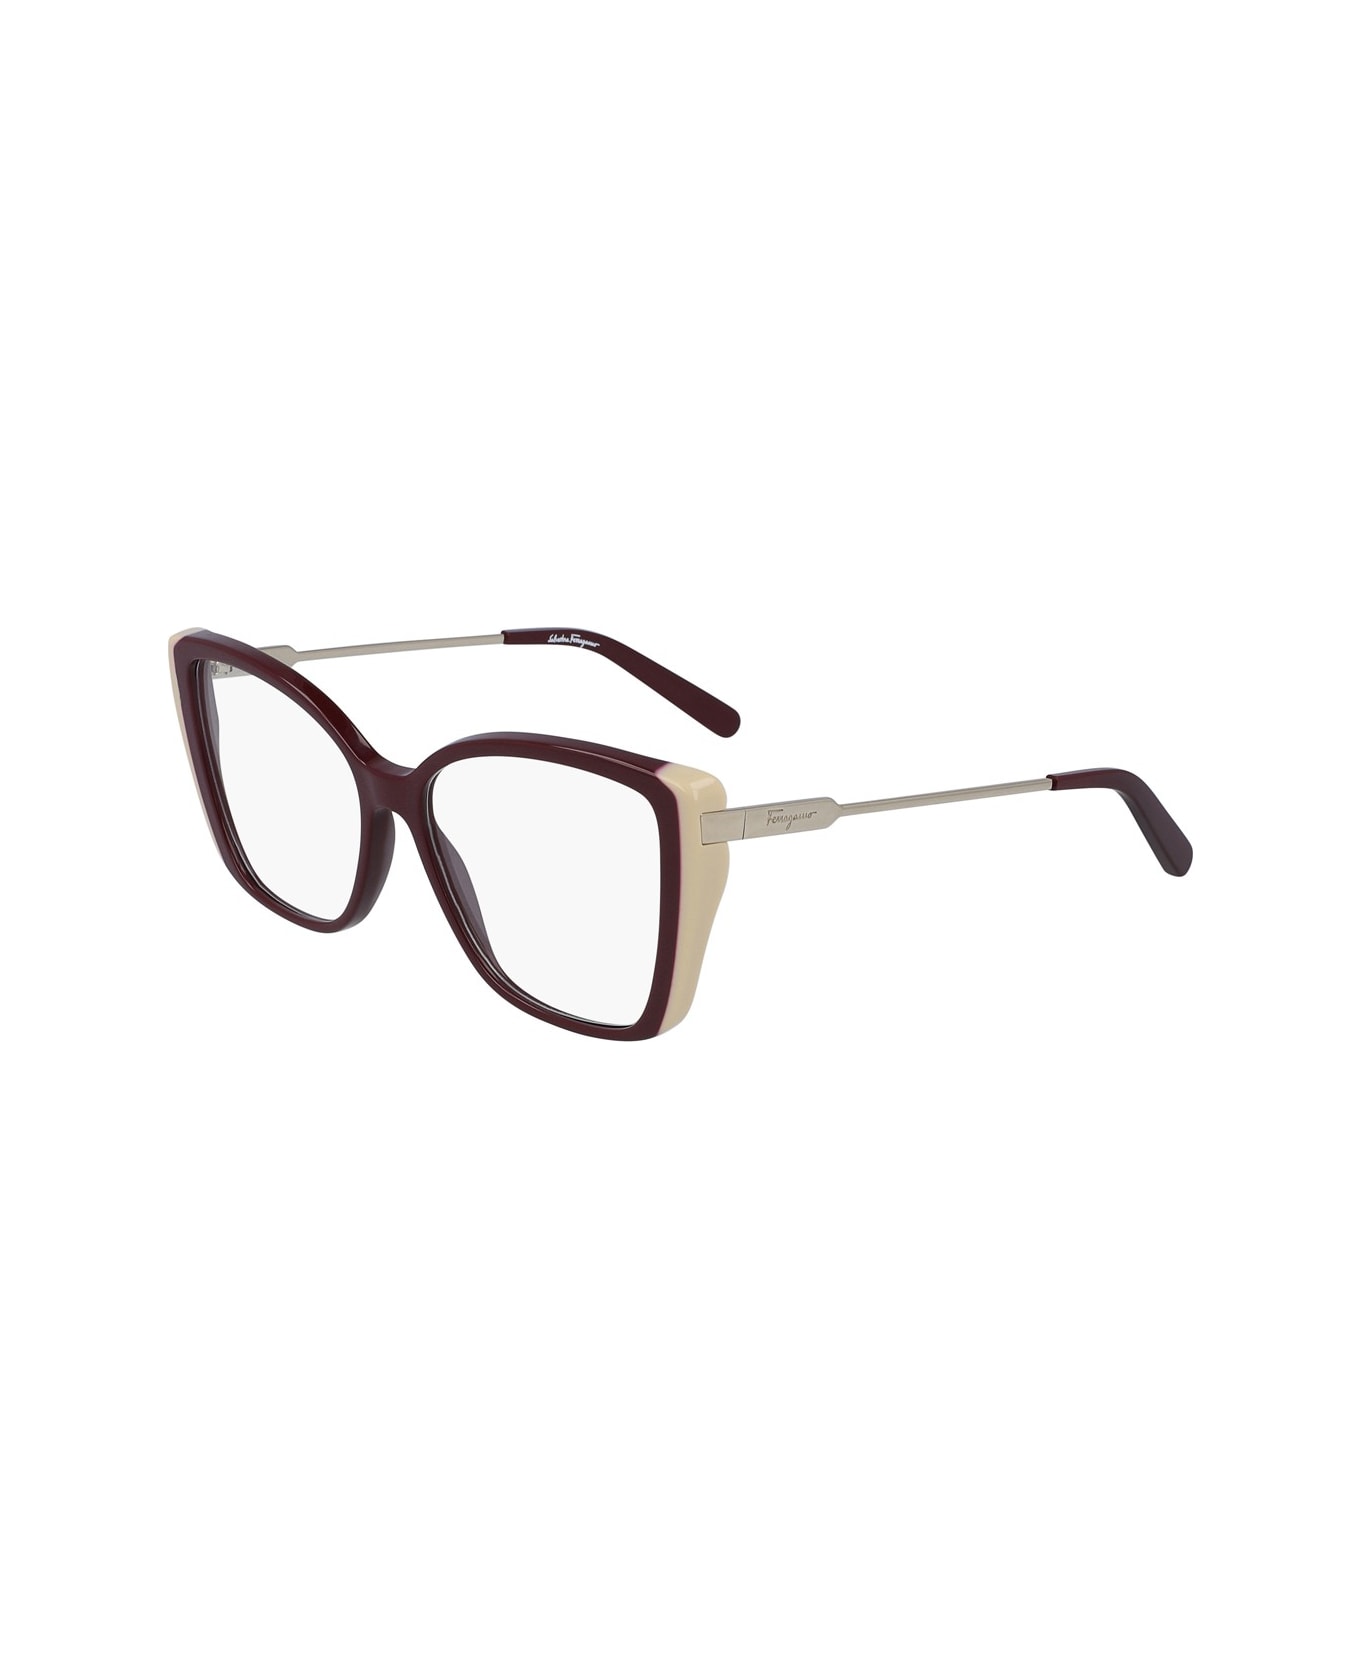 Salvatore Ferragamo Eyewear Sf2850 Glasses - Rosso アイウェア